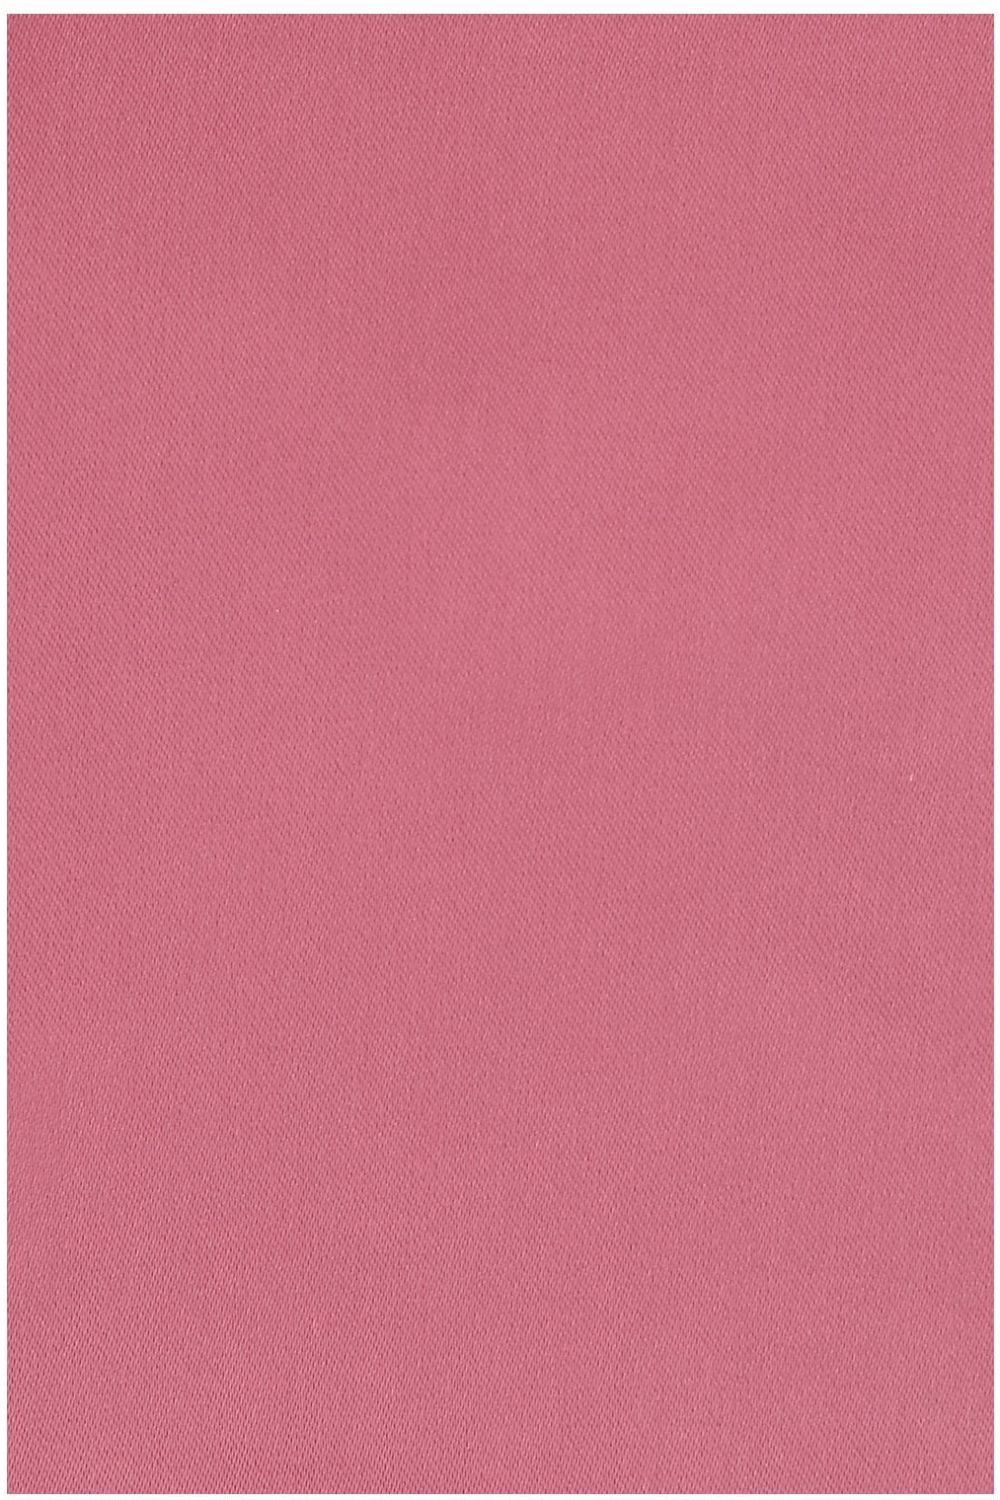 Plain dusky pink satin classic mens  bow tie & pocket square set 